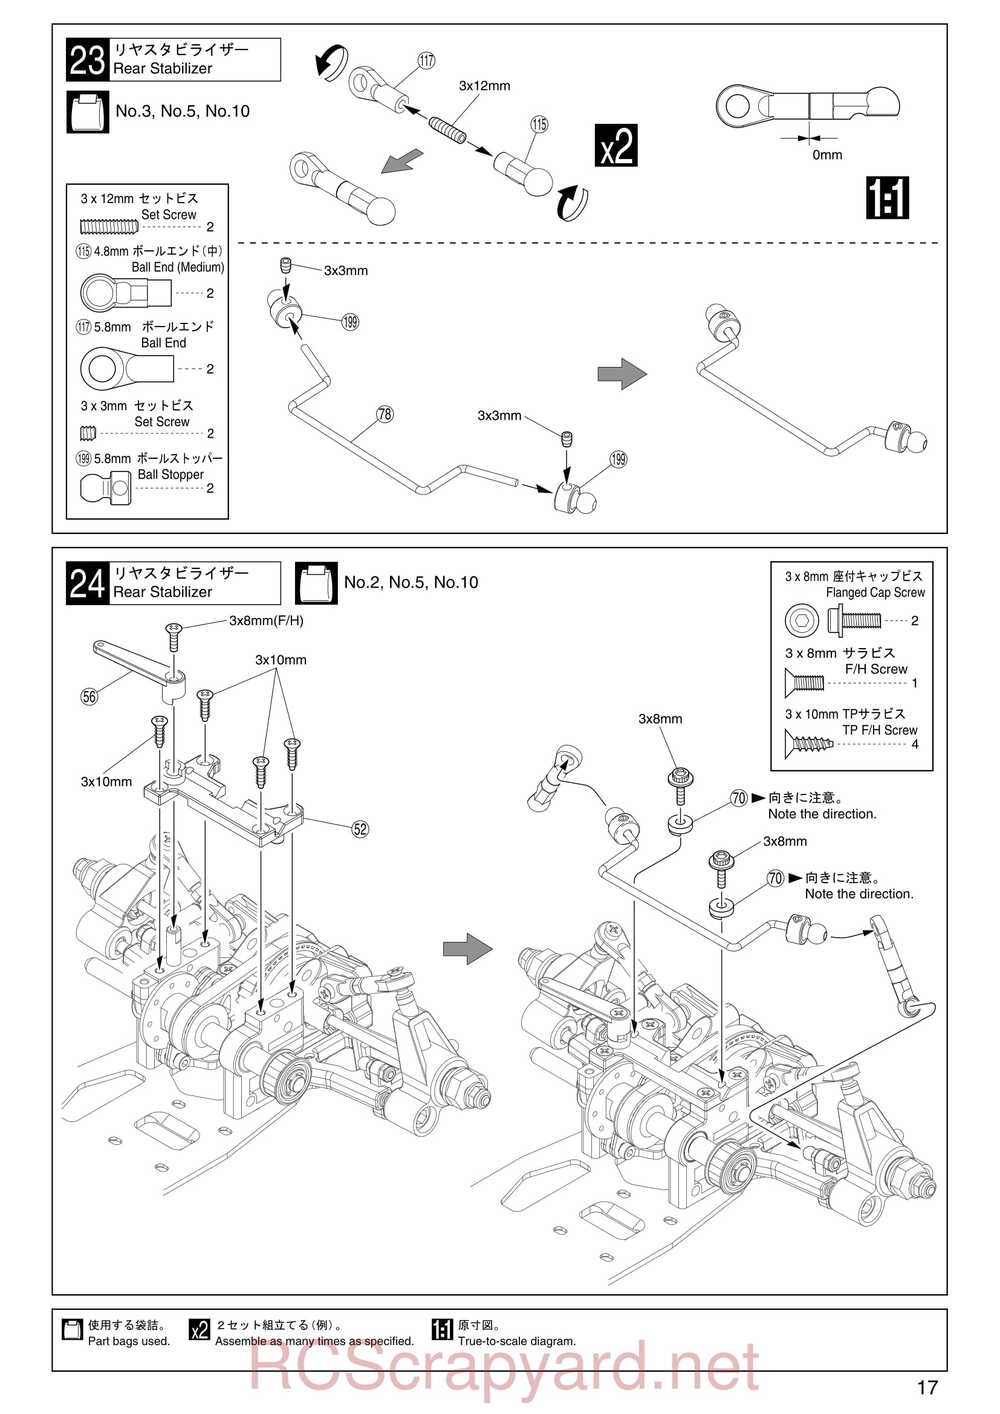 Kyosho - 31256 - V-One RRR - Manual - Page 17